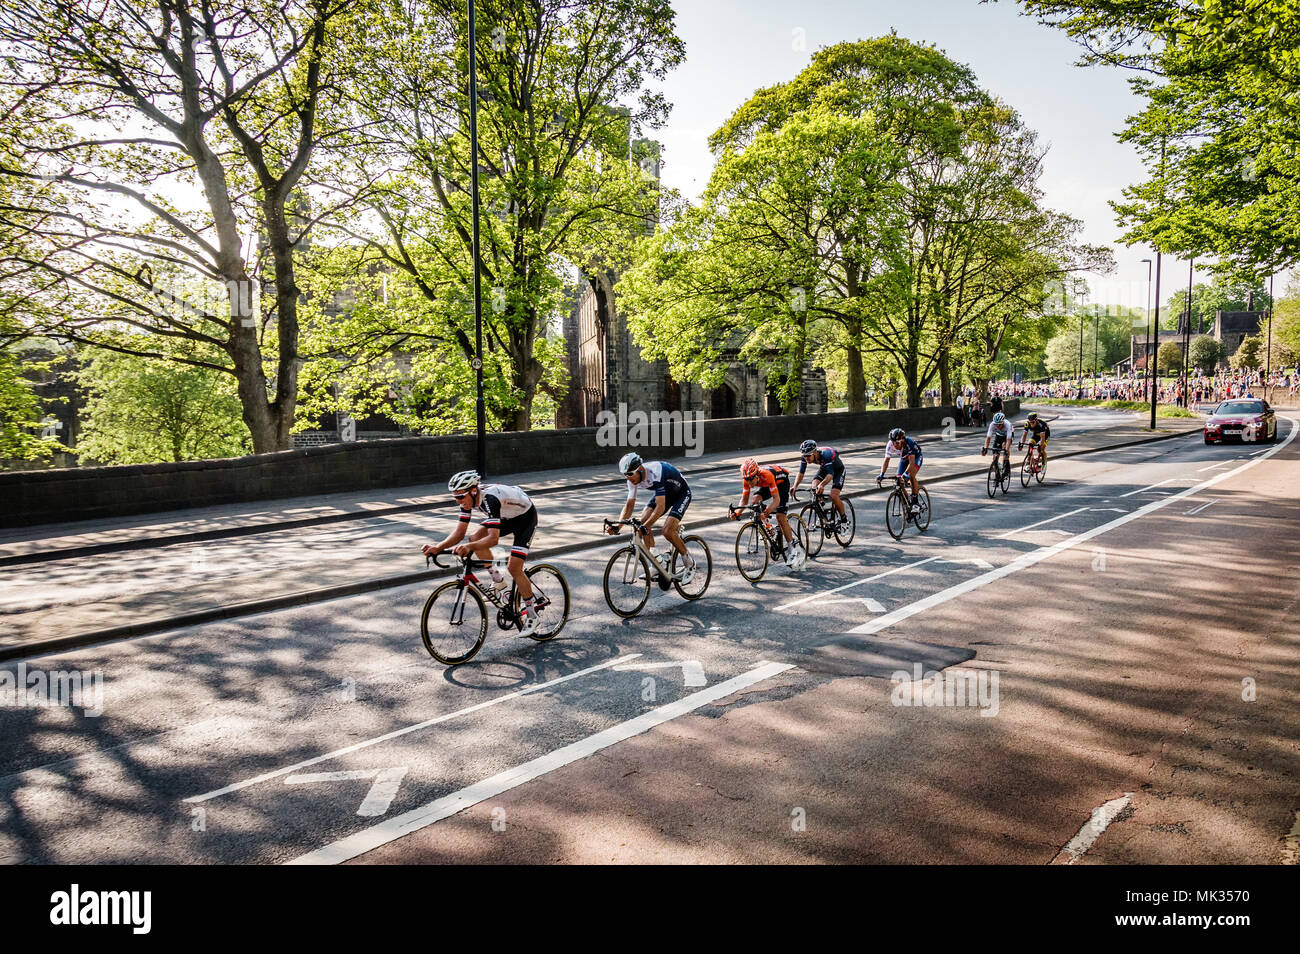 Leeds, Reino Unido - Mayo 06, 2018: Los ciclistas que participan en la etapa 4 del Tour de Yorkshire pass Kirkstall Abbey en Leeds. Crédito: colobusyeti.co.uk/Alamy Live News Foto de stock